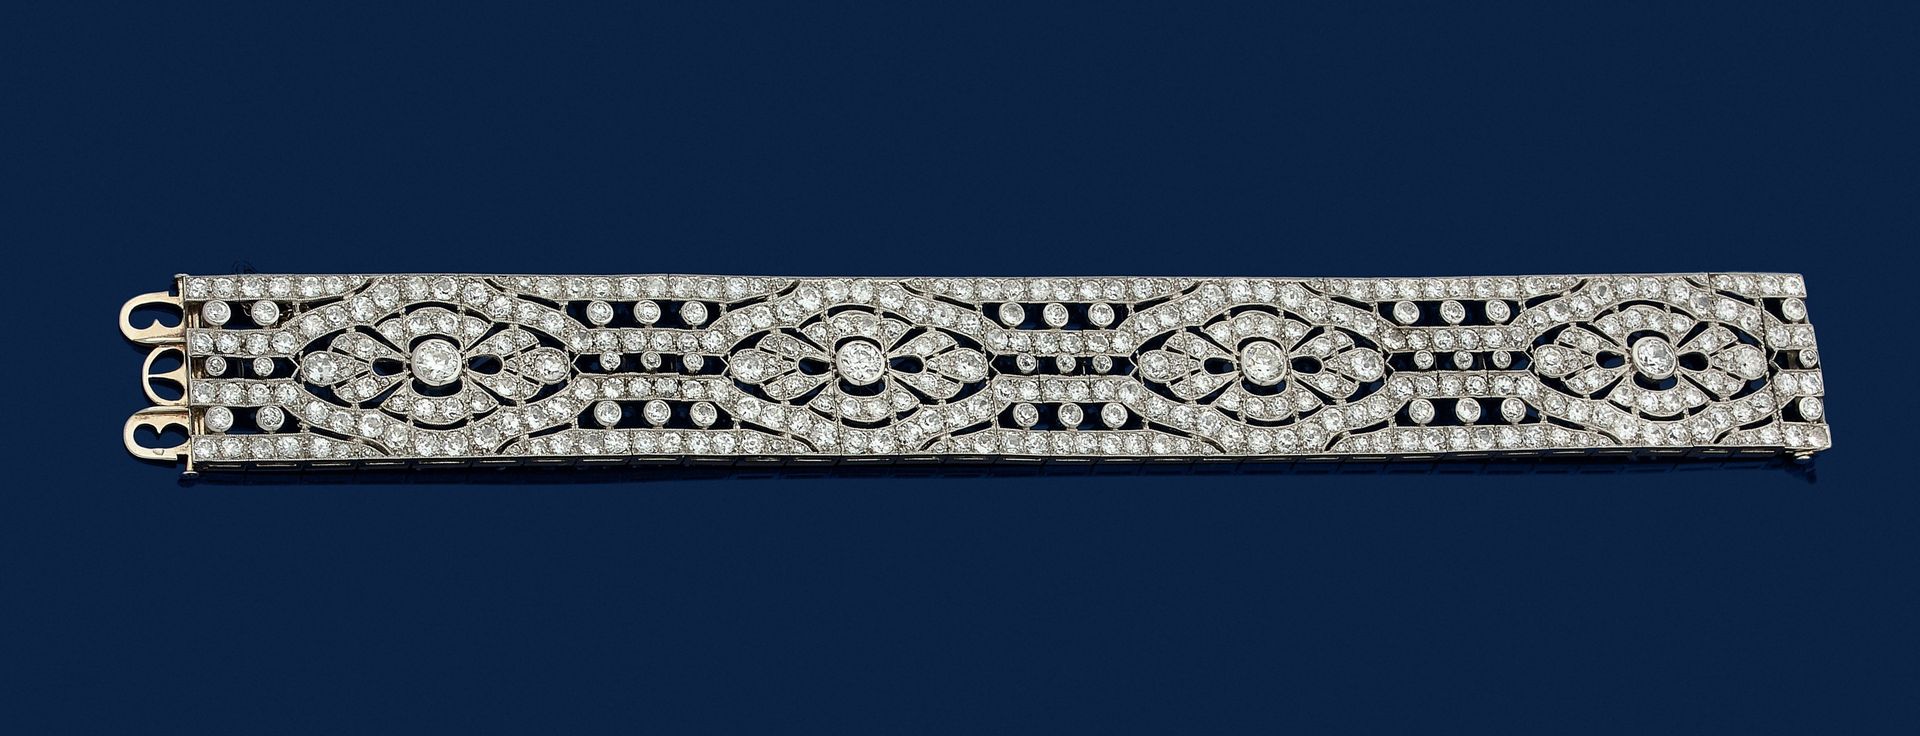 Null 一条法国1925年的铂金手链，镶嵌着钻石。 这条手链由铂金制成，上面有几何图案，镶嵌着圆形老式切割钻石。1925年代的法国作品。尺寸：18.8 x 2&hellip;